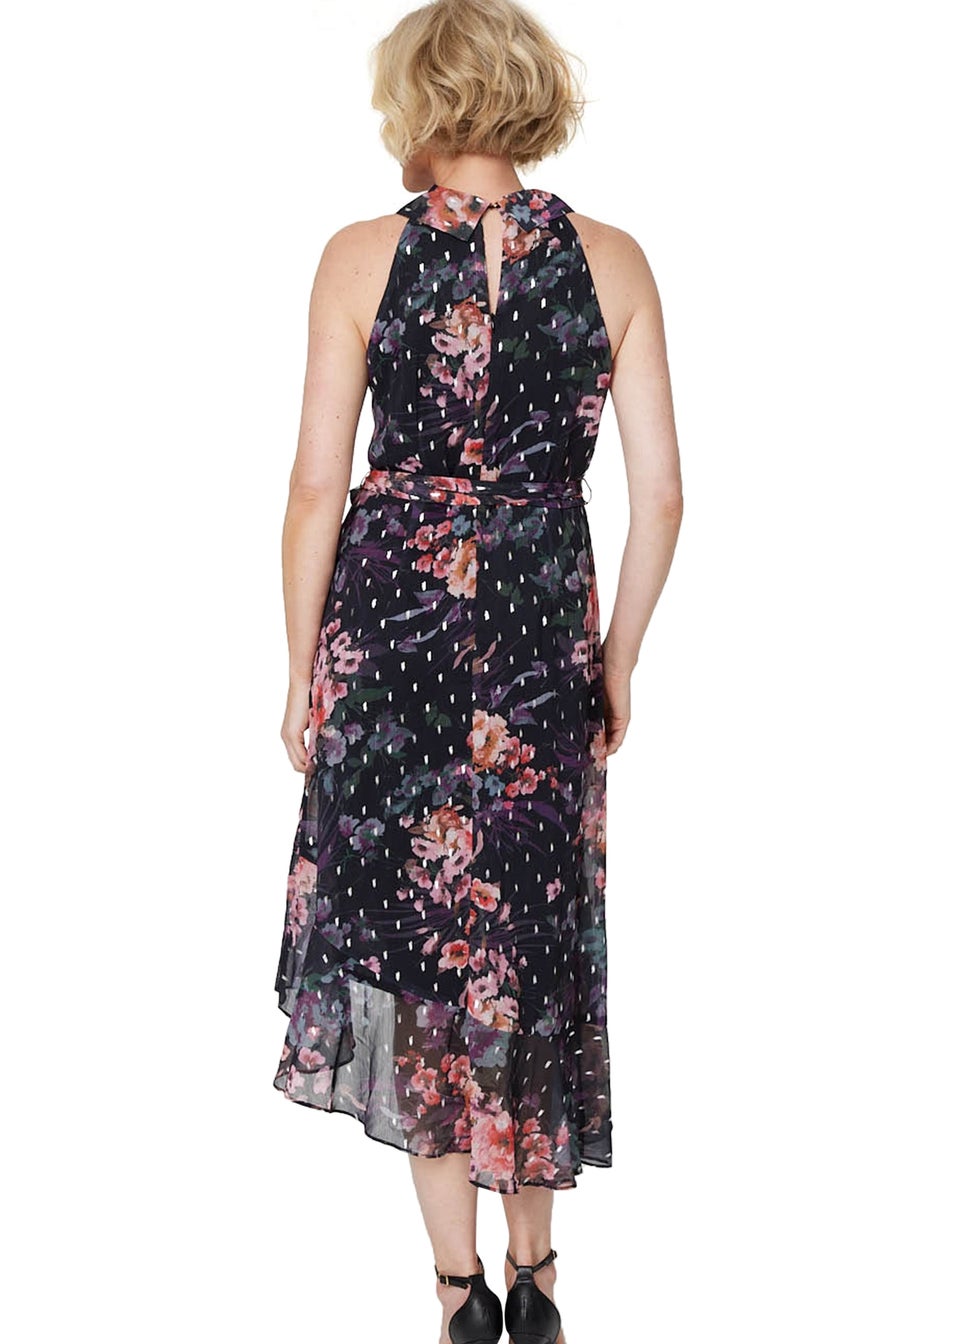 Izabel London Black Floral High Neck Wrap Dress - Matalan